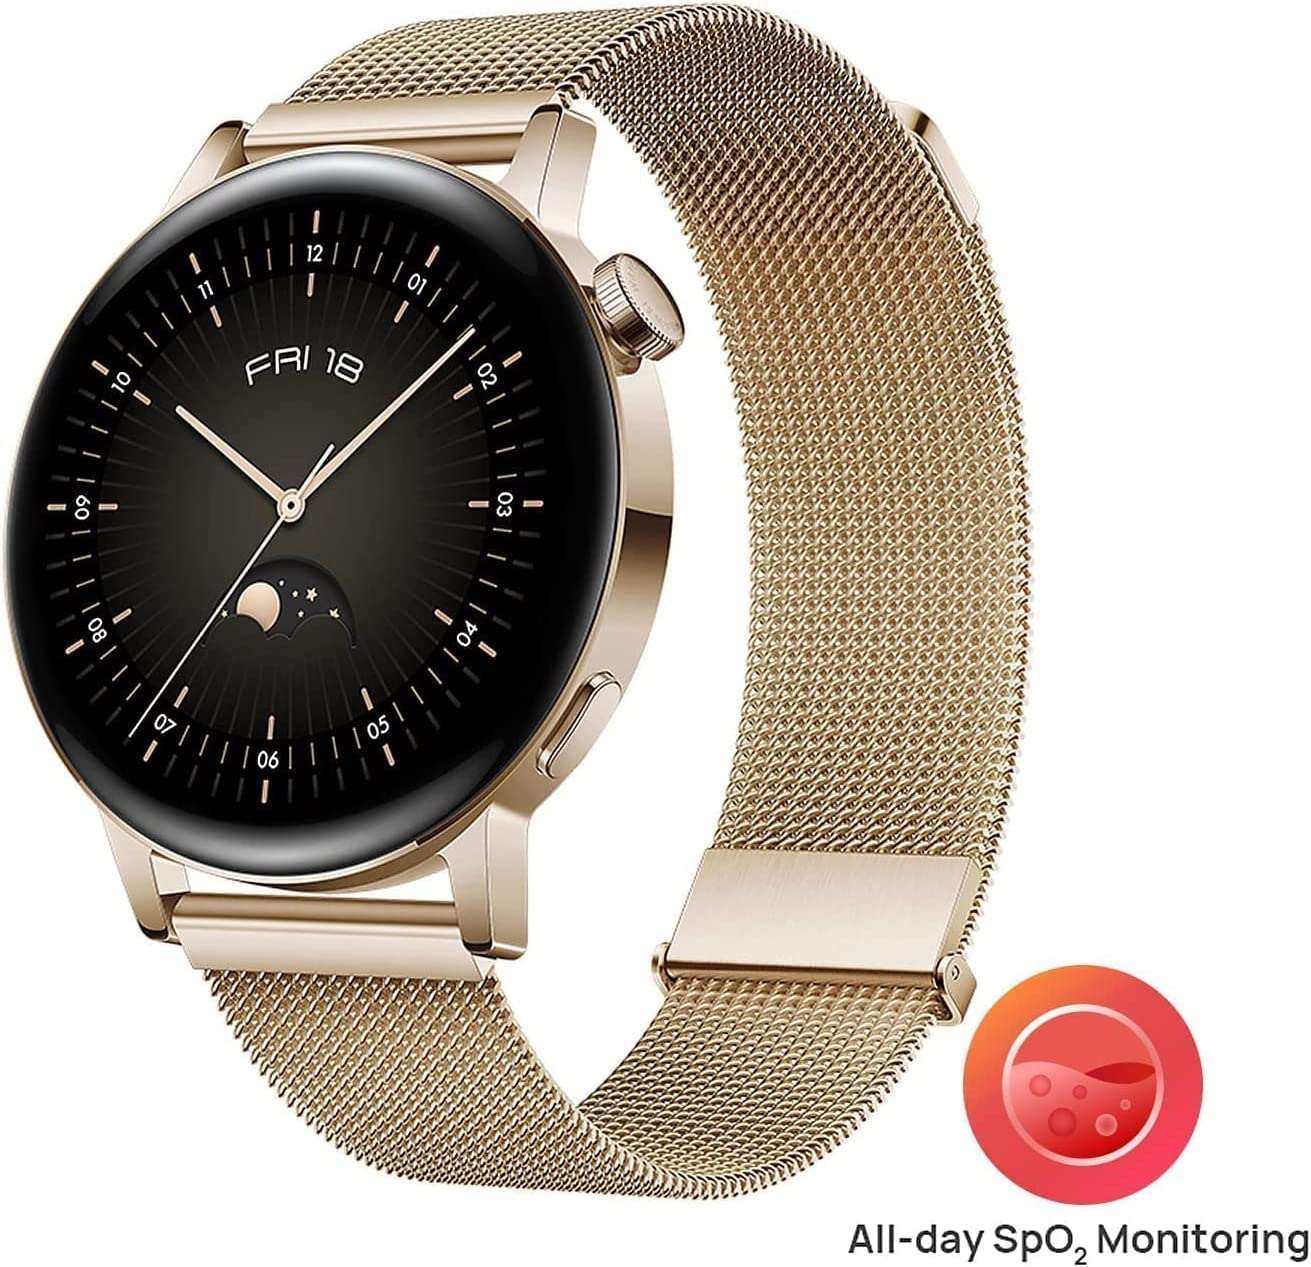 HUAWEI WATCH GT 3 Smartwatch, 1 Week's Battery Life - Veloreo 